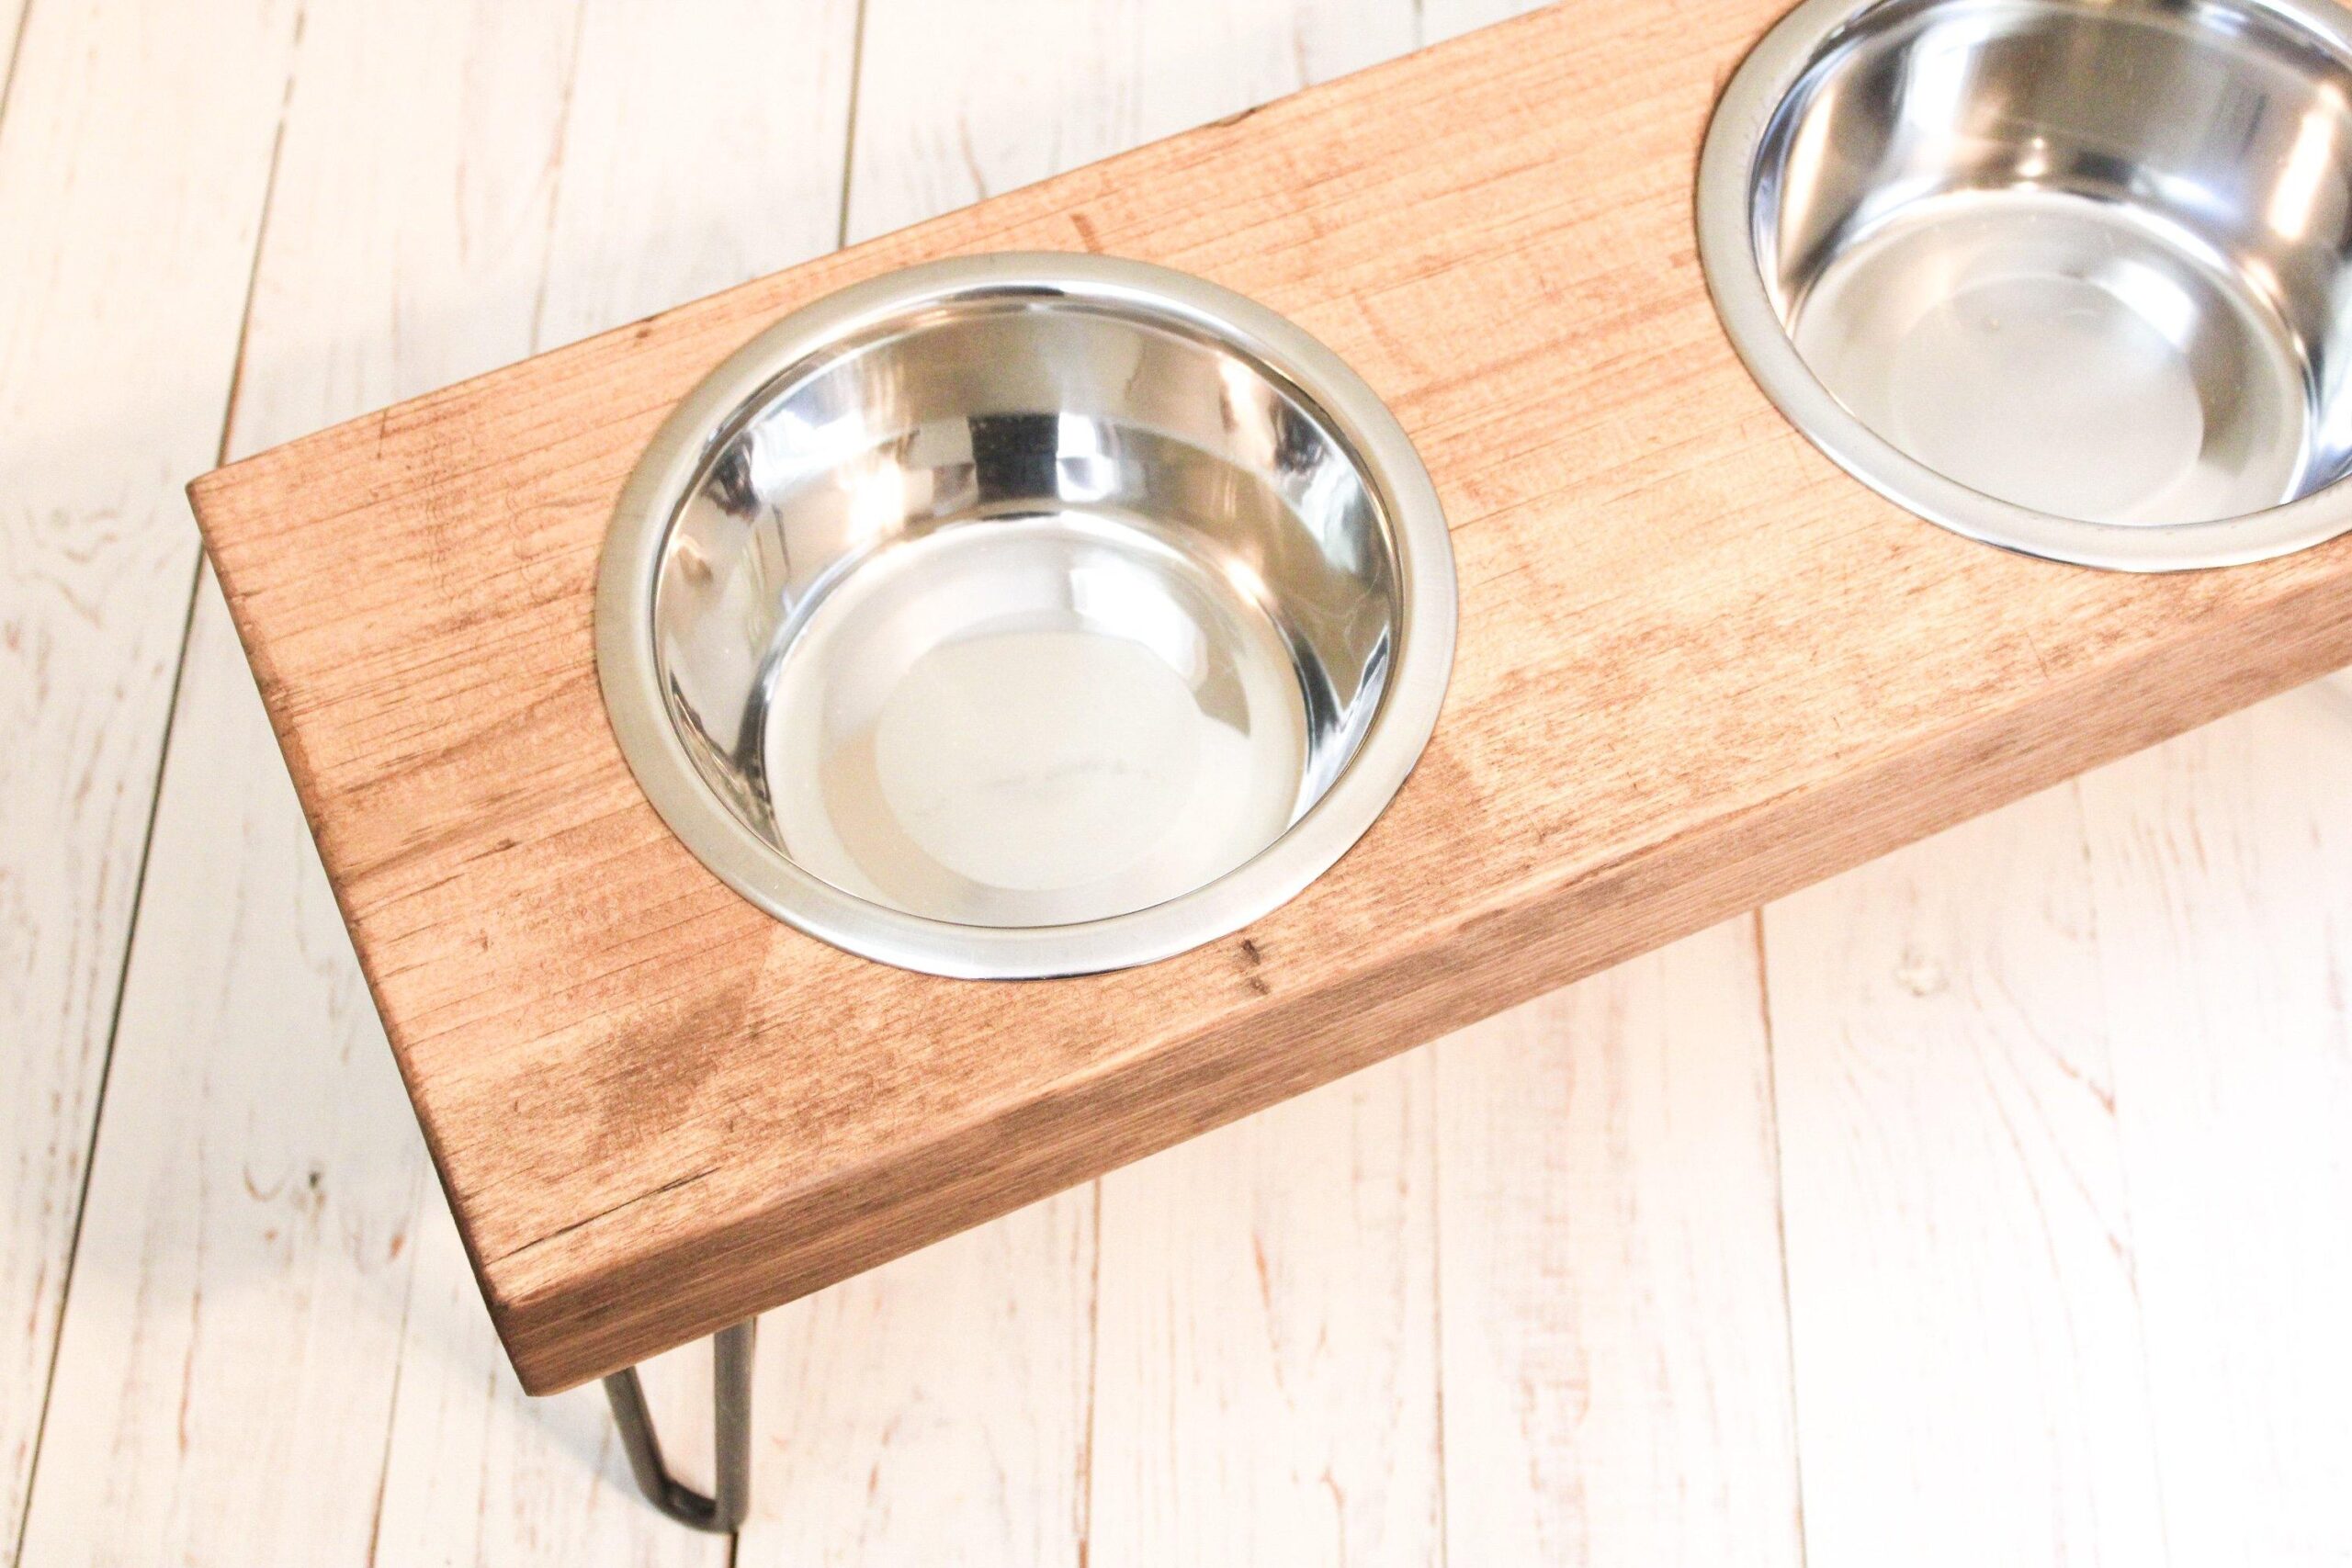 How to Make a DIY Pet Bowl Stand